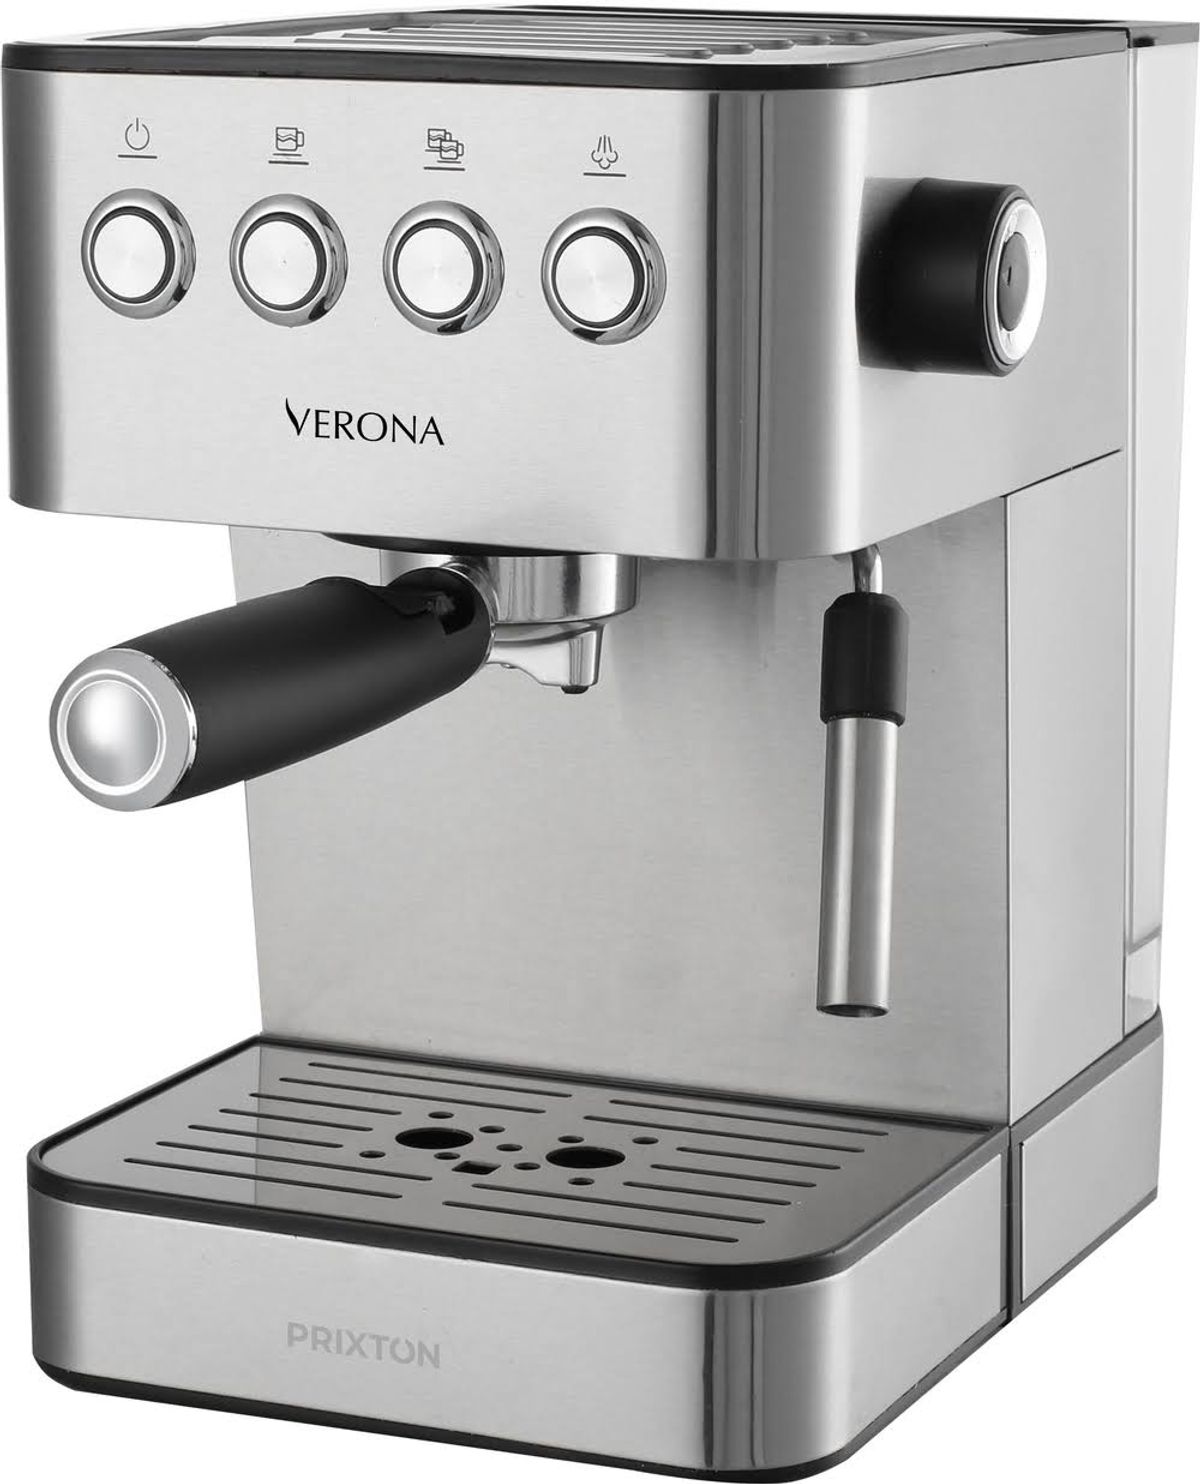 PRIXTON Silber Kaffeemaschine Verona